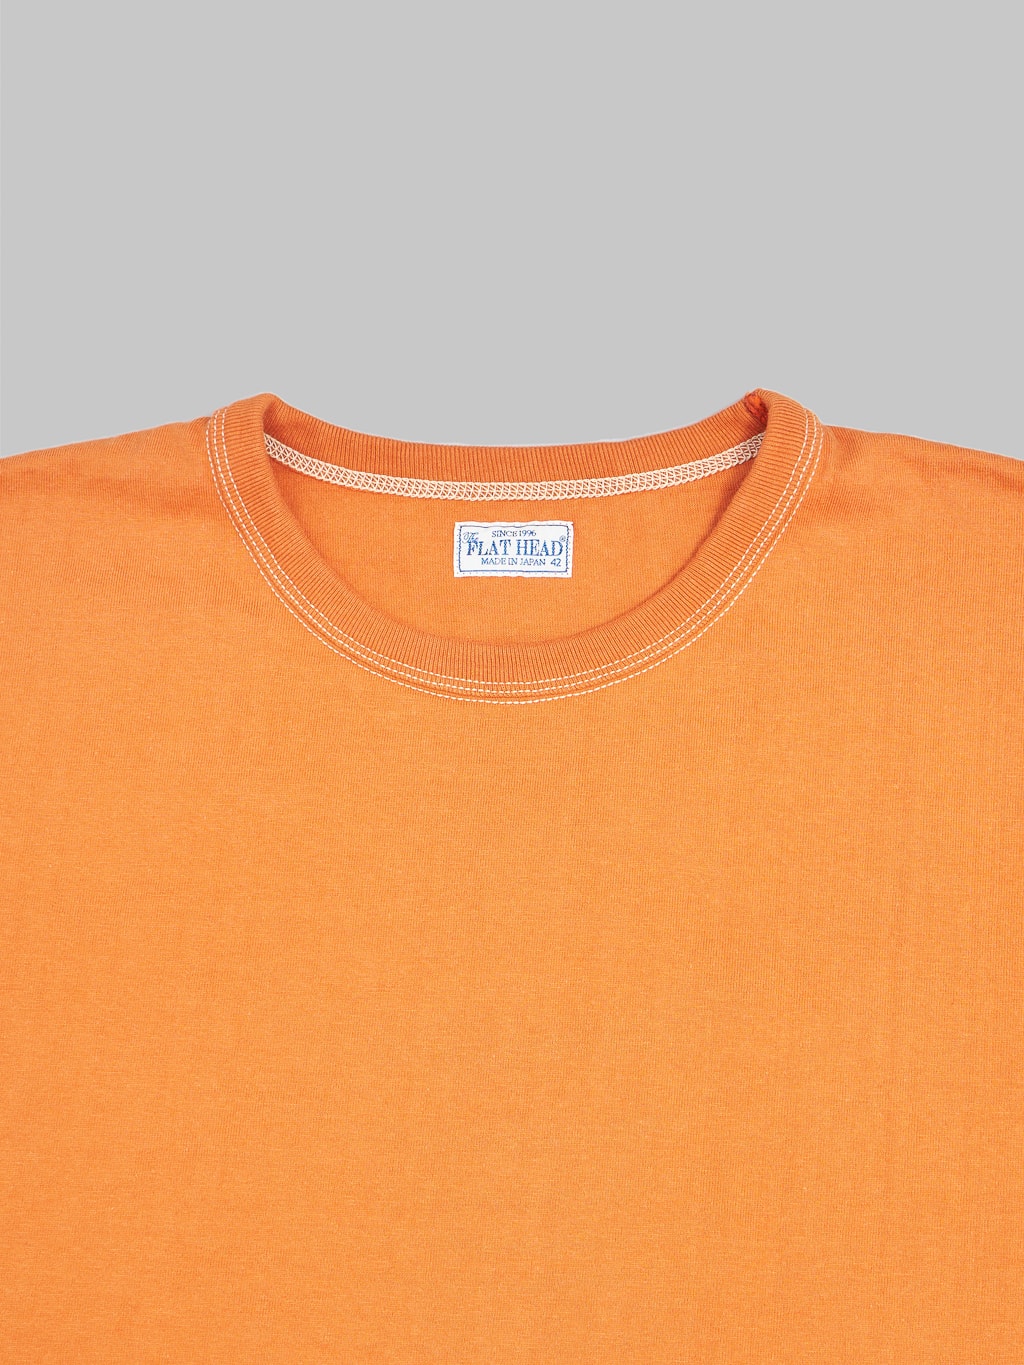 The Flat Head Loopwheeled Heavyweight Plain TShirt Dark Orange collar details